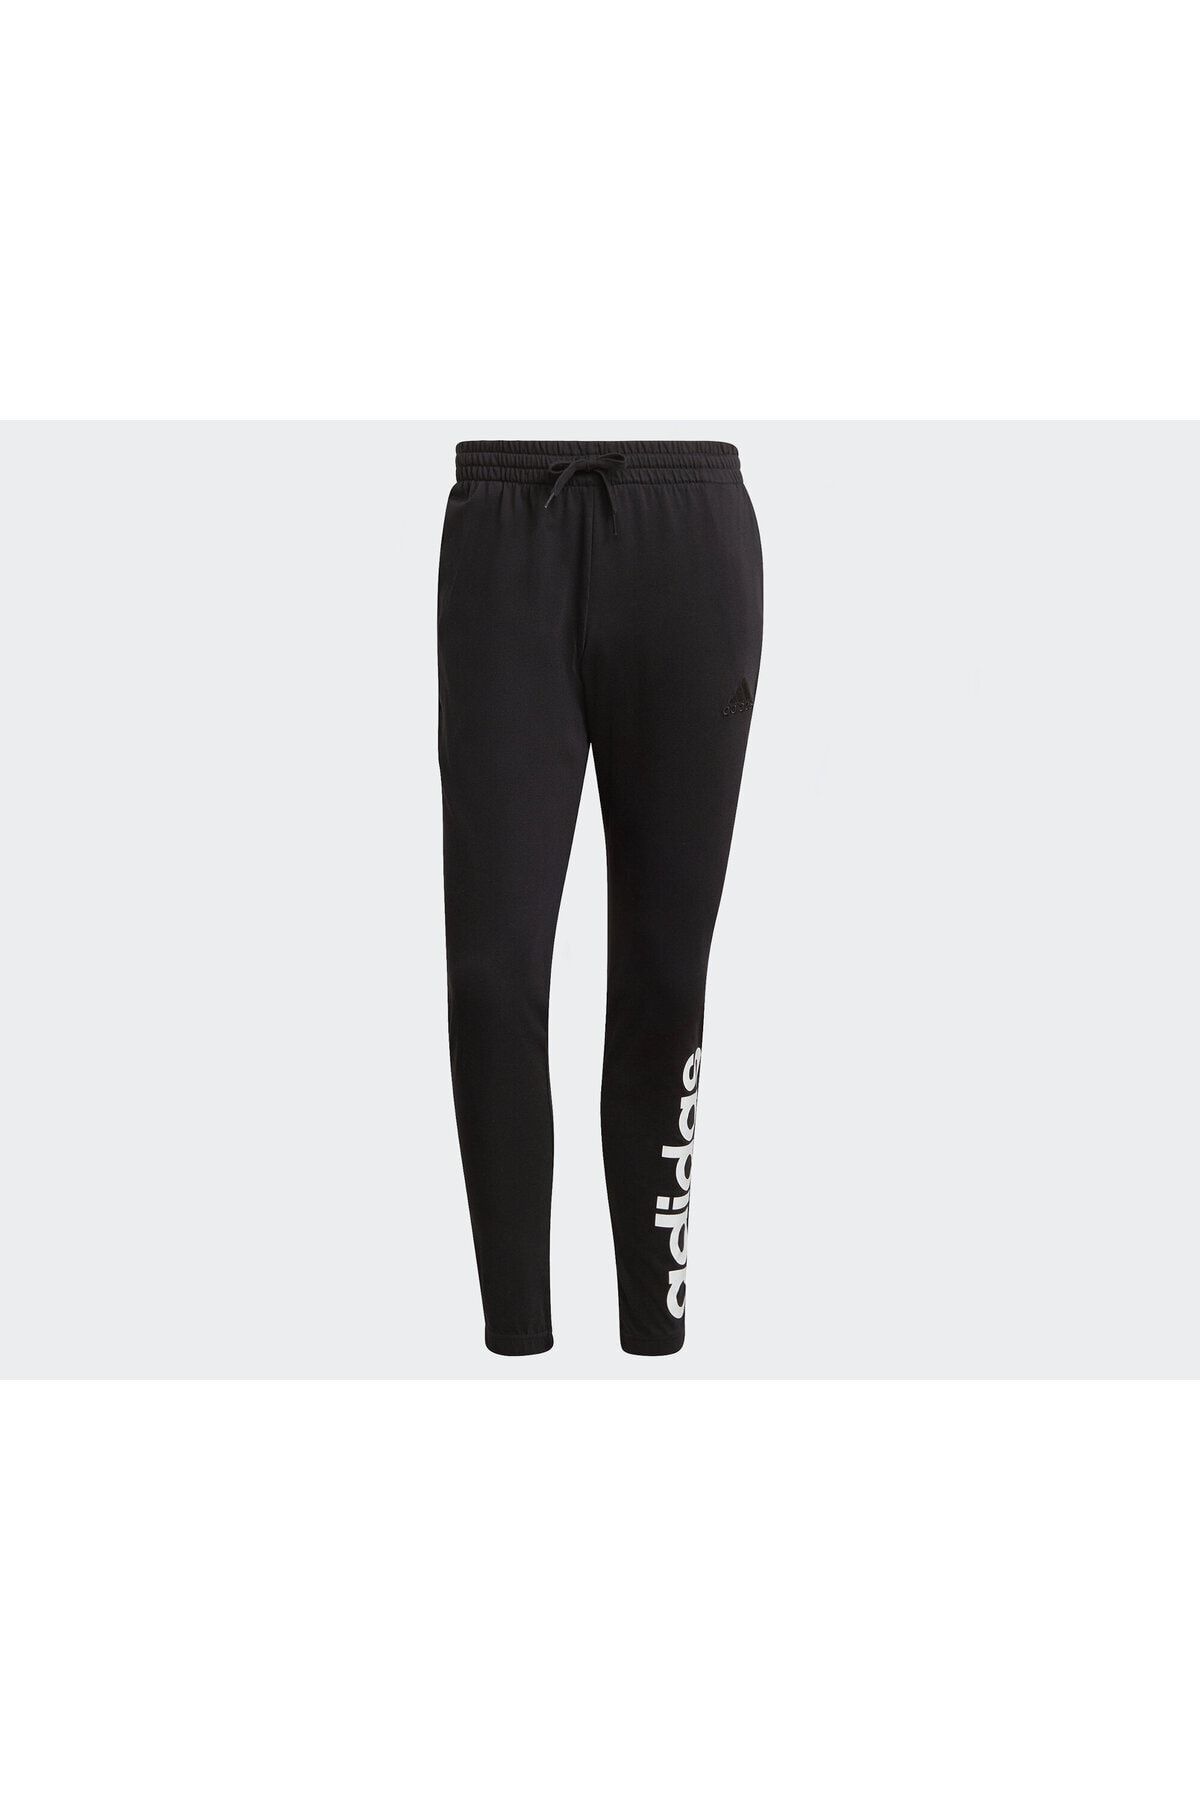 [DP2398] Womens Adidas Essentials Linear Pant